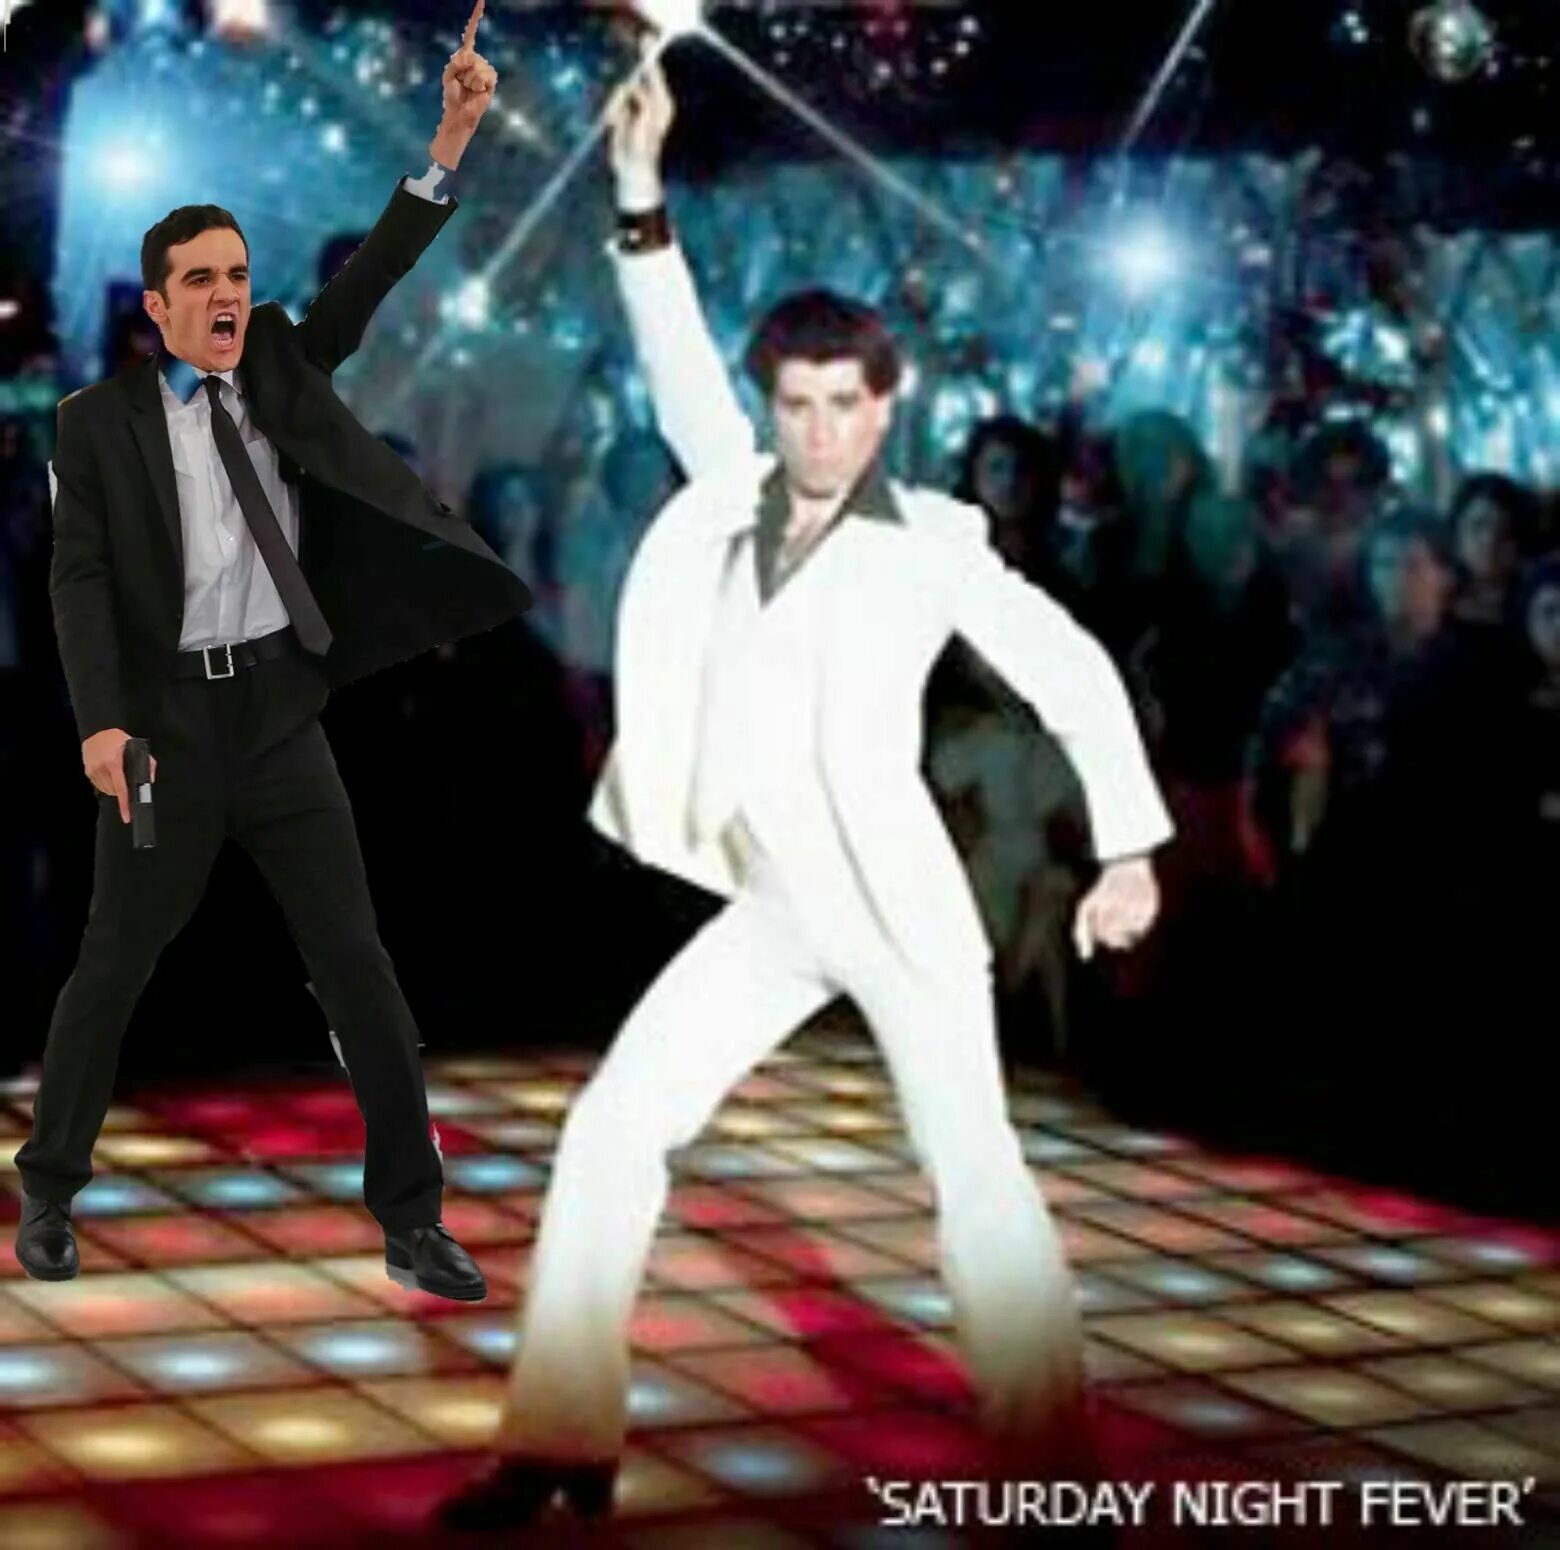 Saturday Night Fever Траволта. Джон Траволта диско. Траволта Saturday Night Fever танец. Джон Траволта танцор диско.